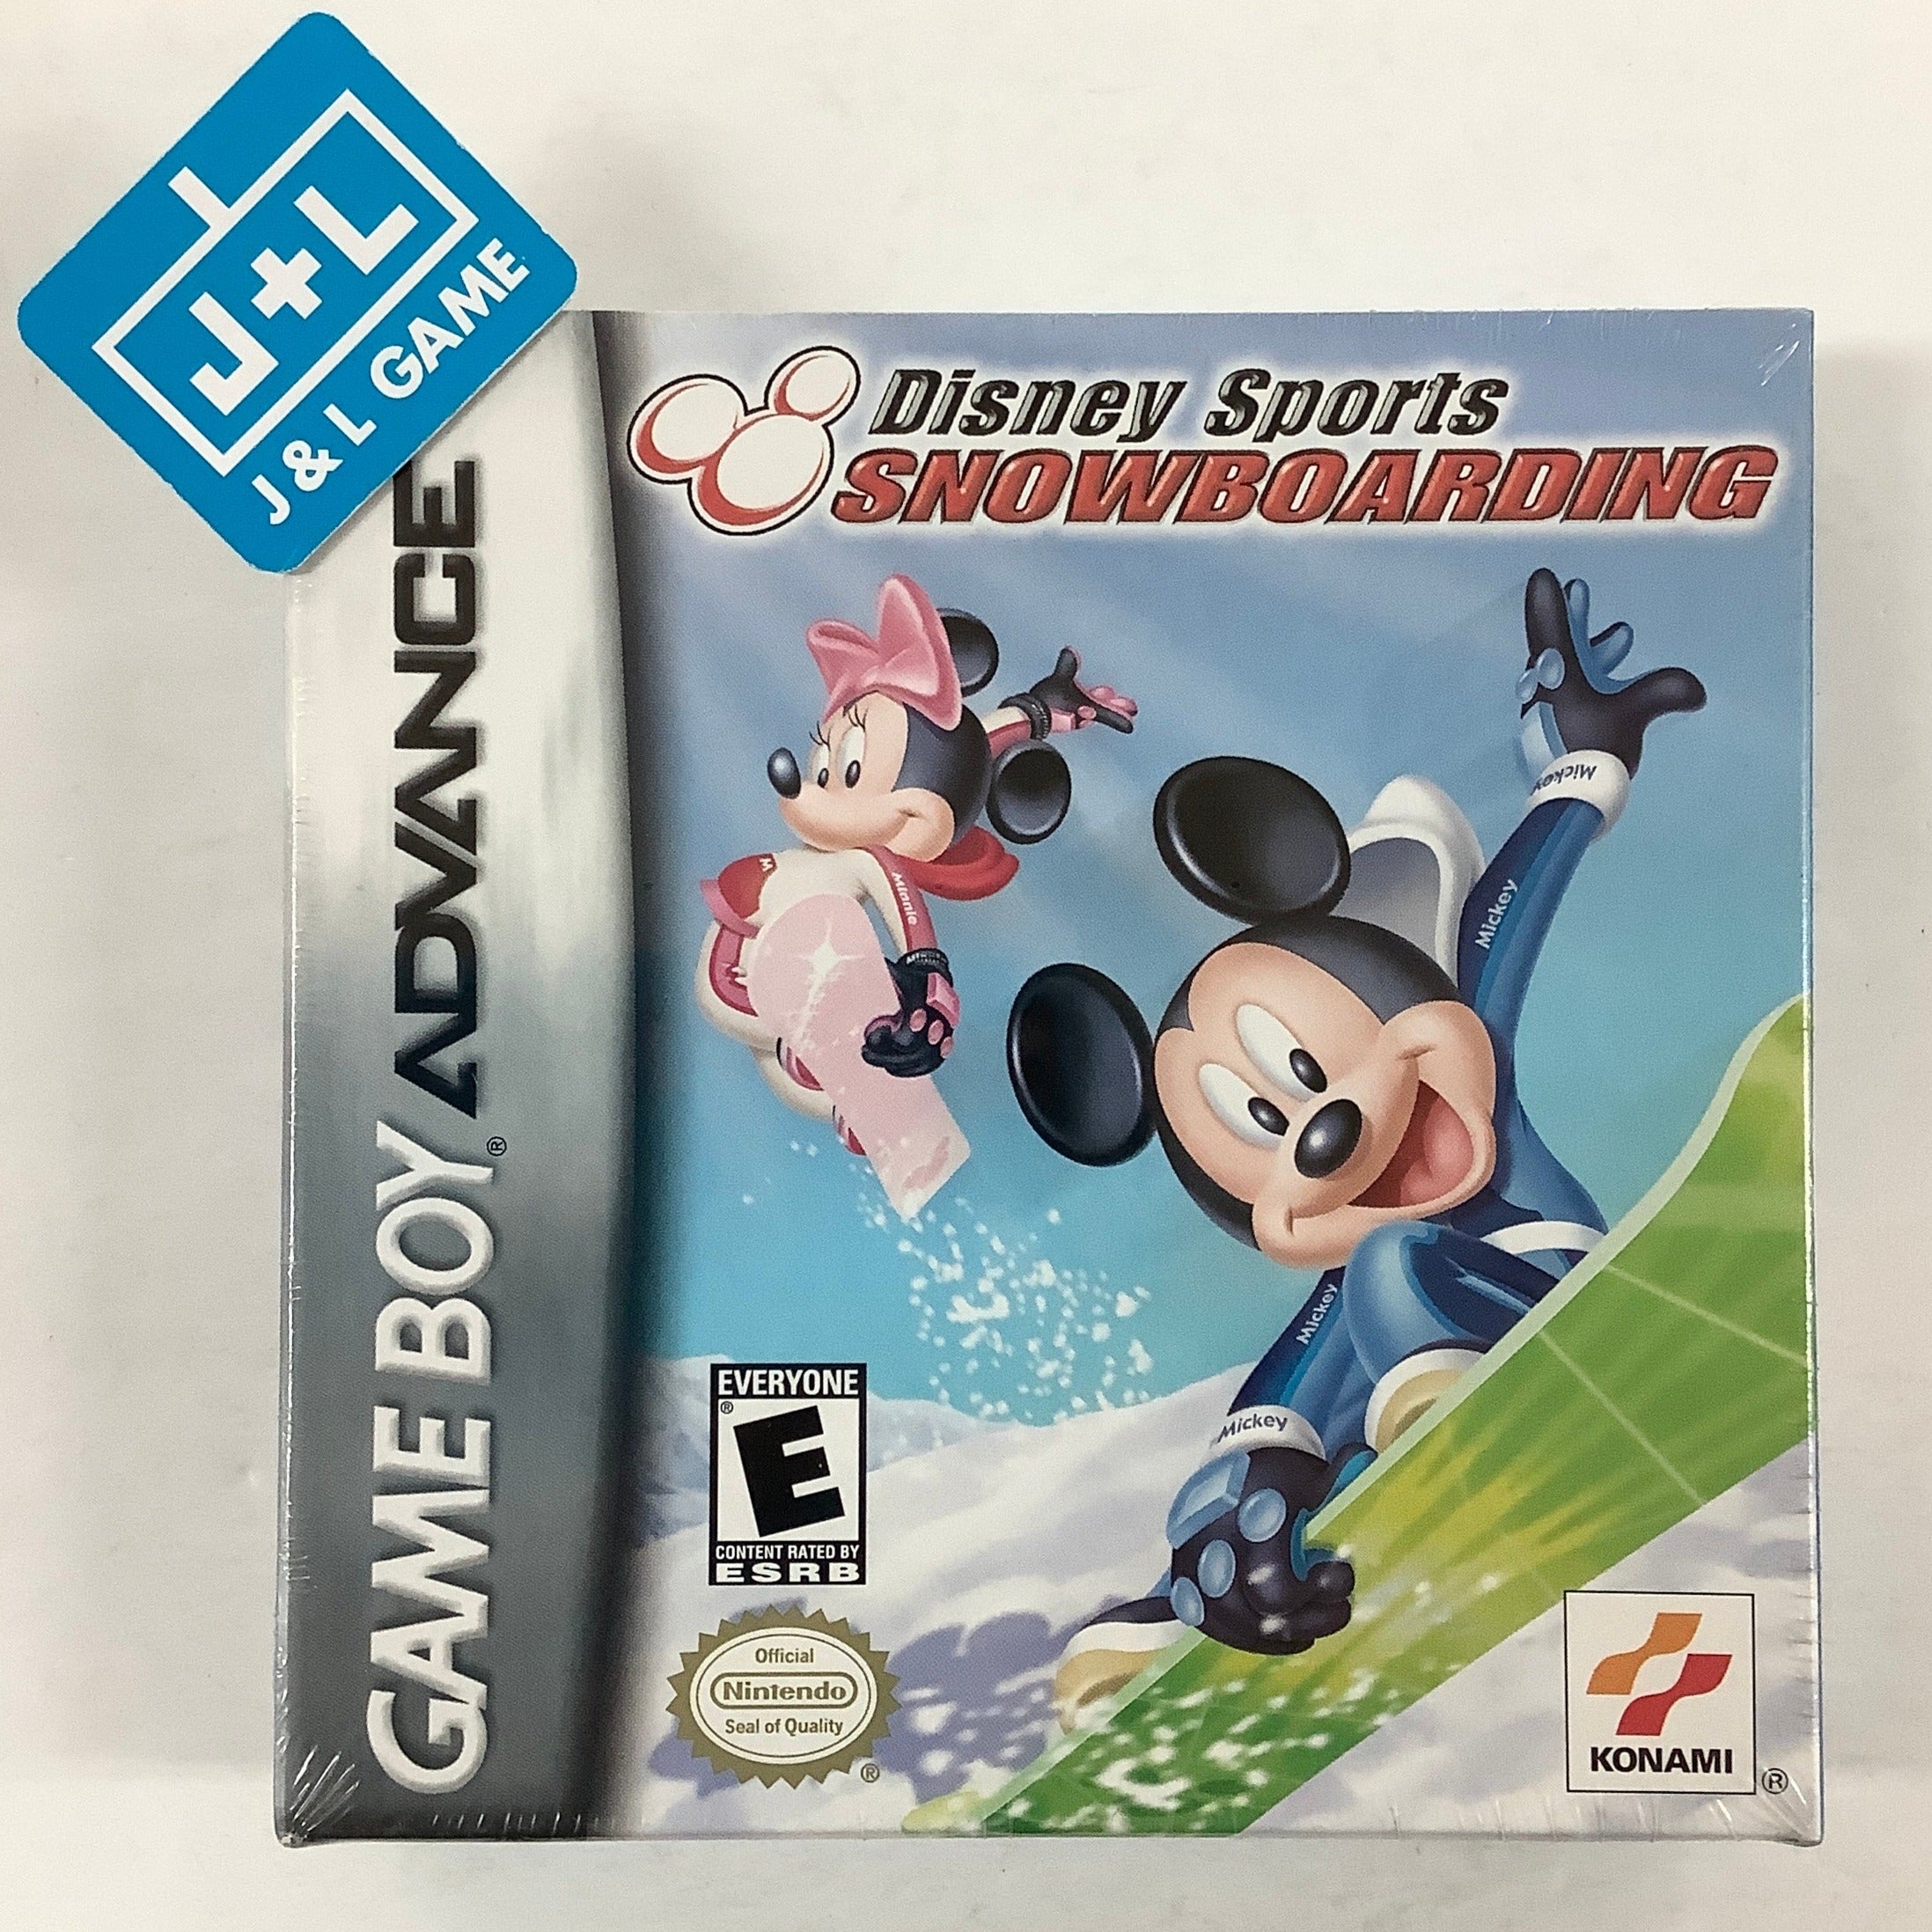 Disney Sports: Snowboarding - (GBA) Game Boy Advance